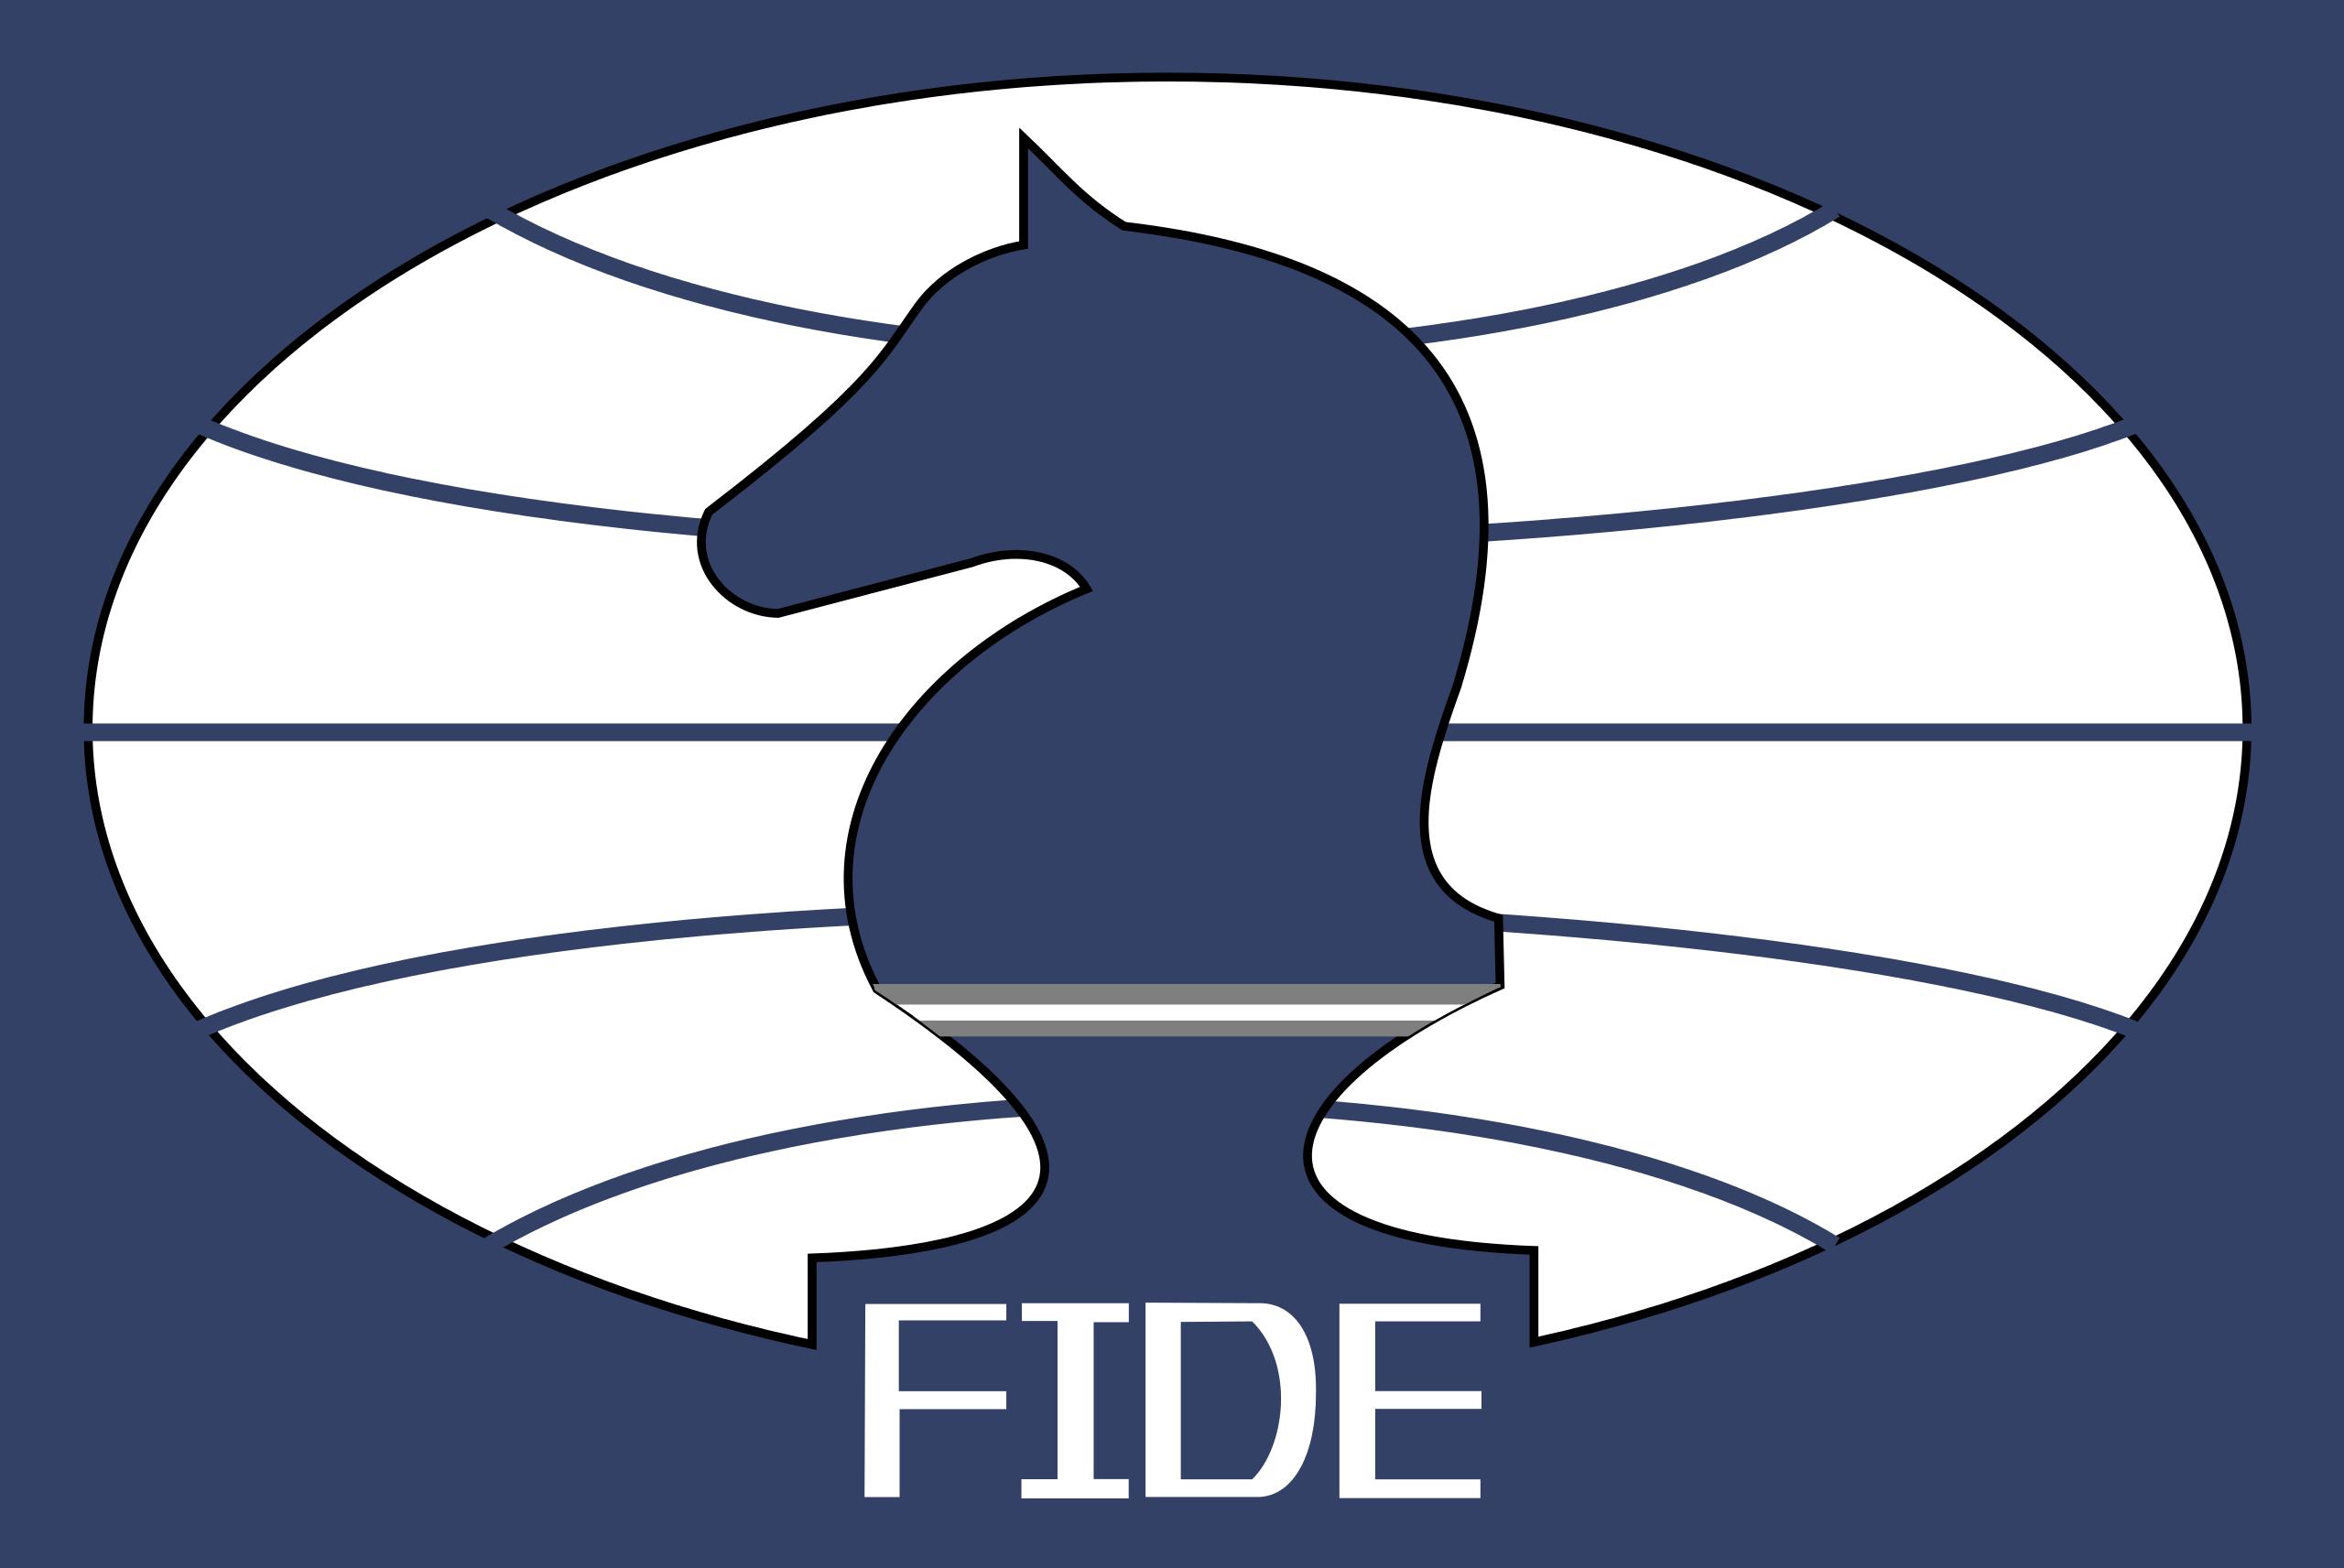 Fide chess. Международная шахматная Федерация Fide. Эмблема ФИДЕ. Шахматы логотип ФИДЕ. Всемирная шахматная Федерация.